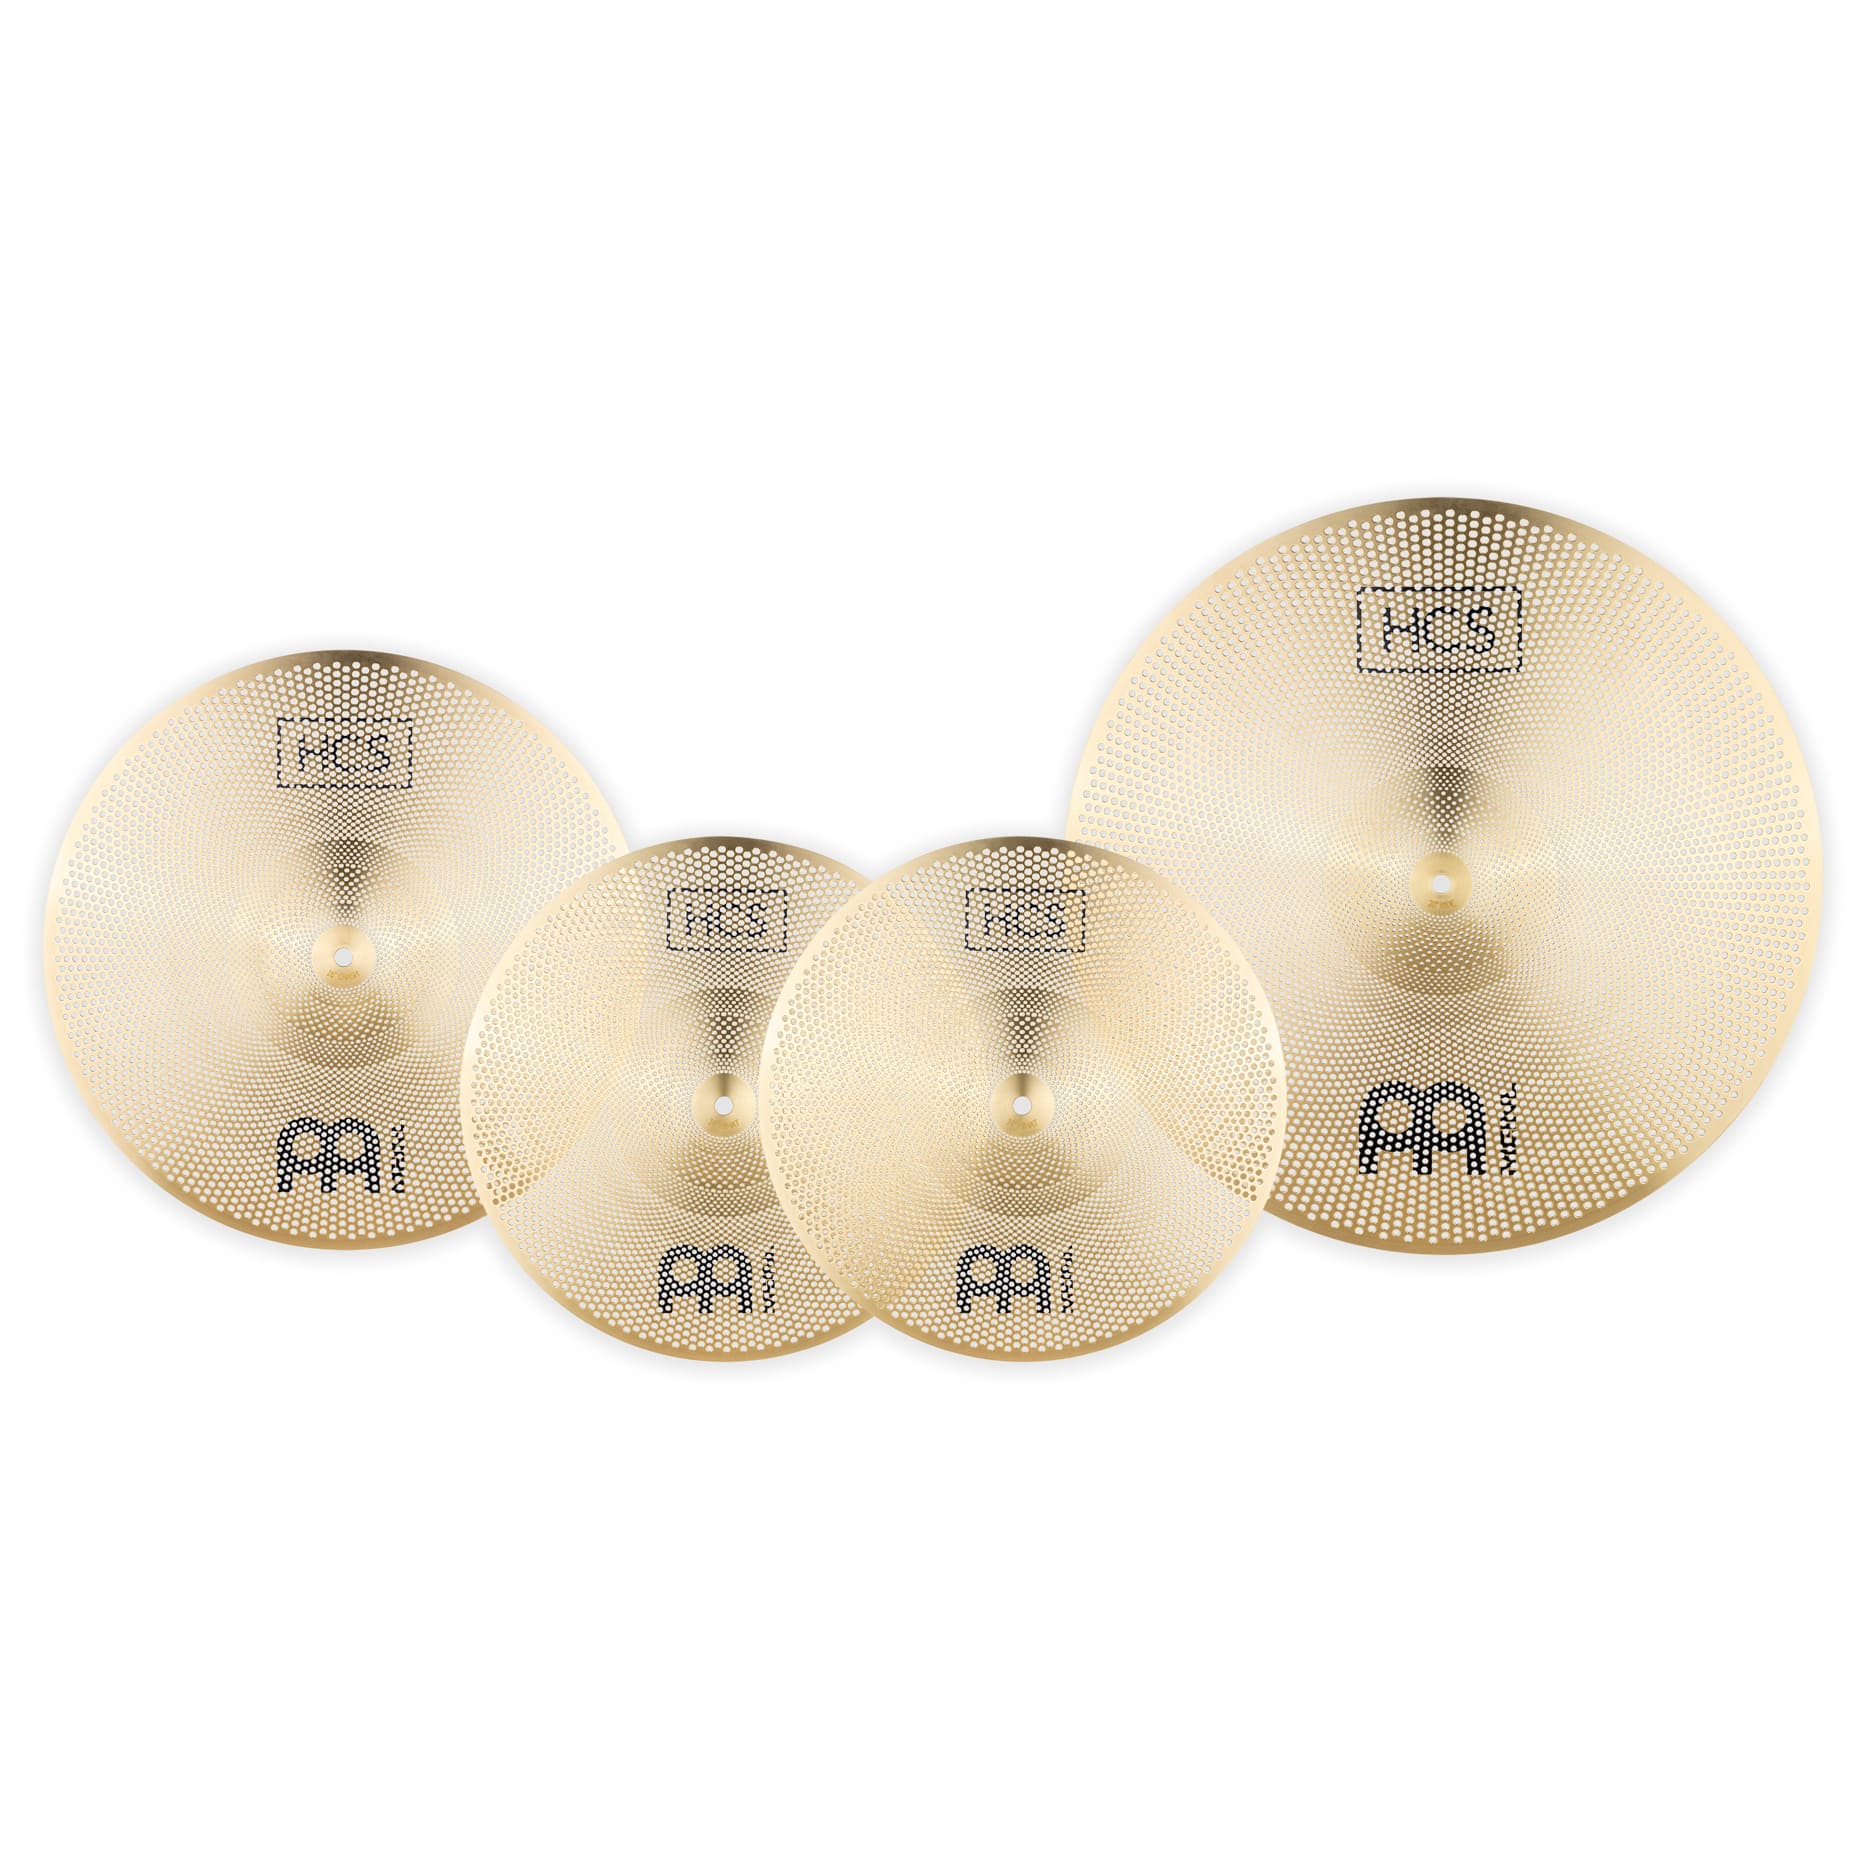 Meinl Cymbals P-HCS141620 - Practice HCS Cymbal Set 2